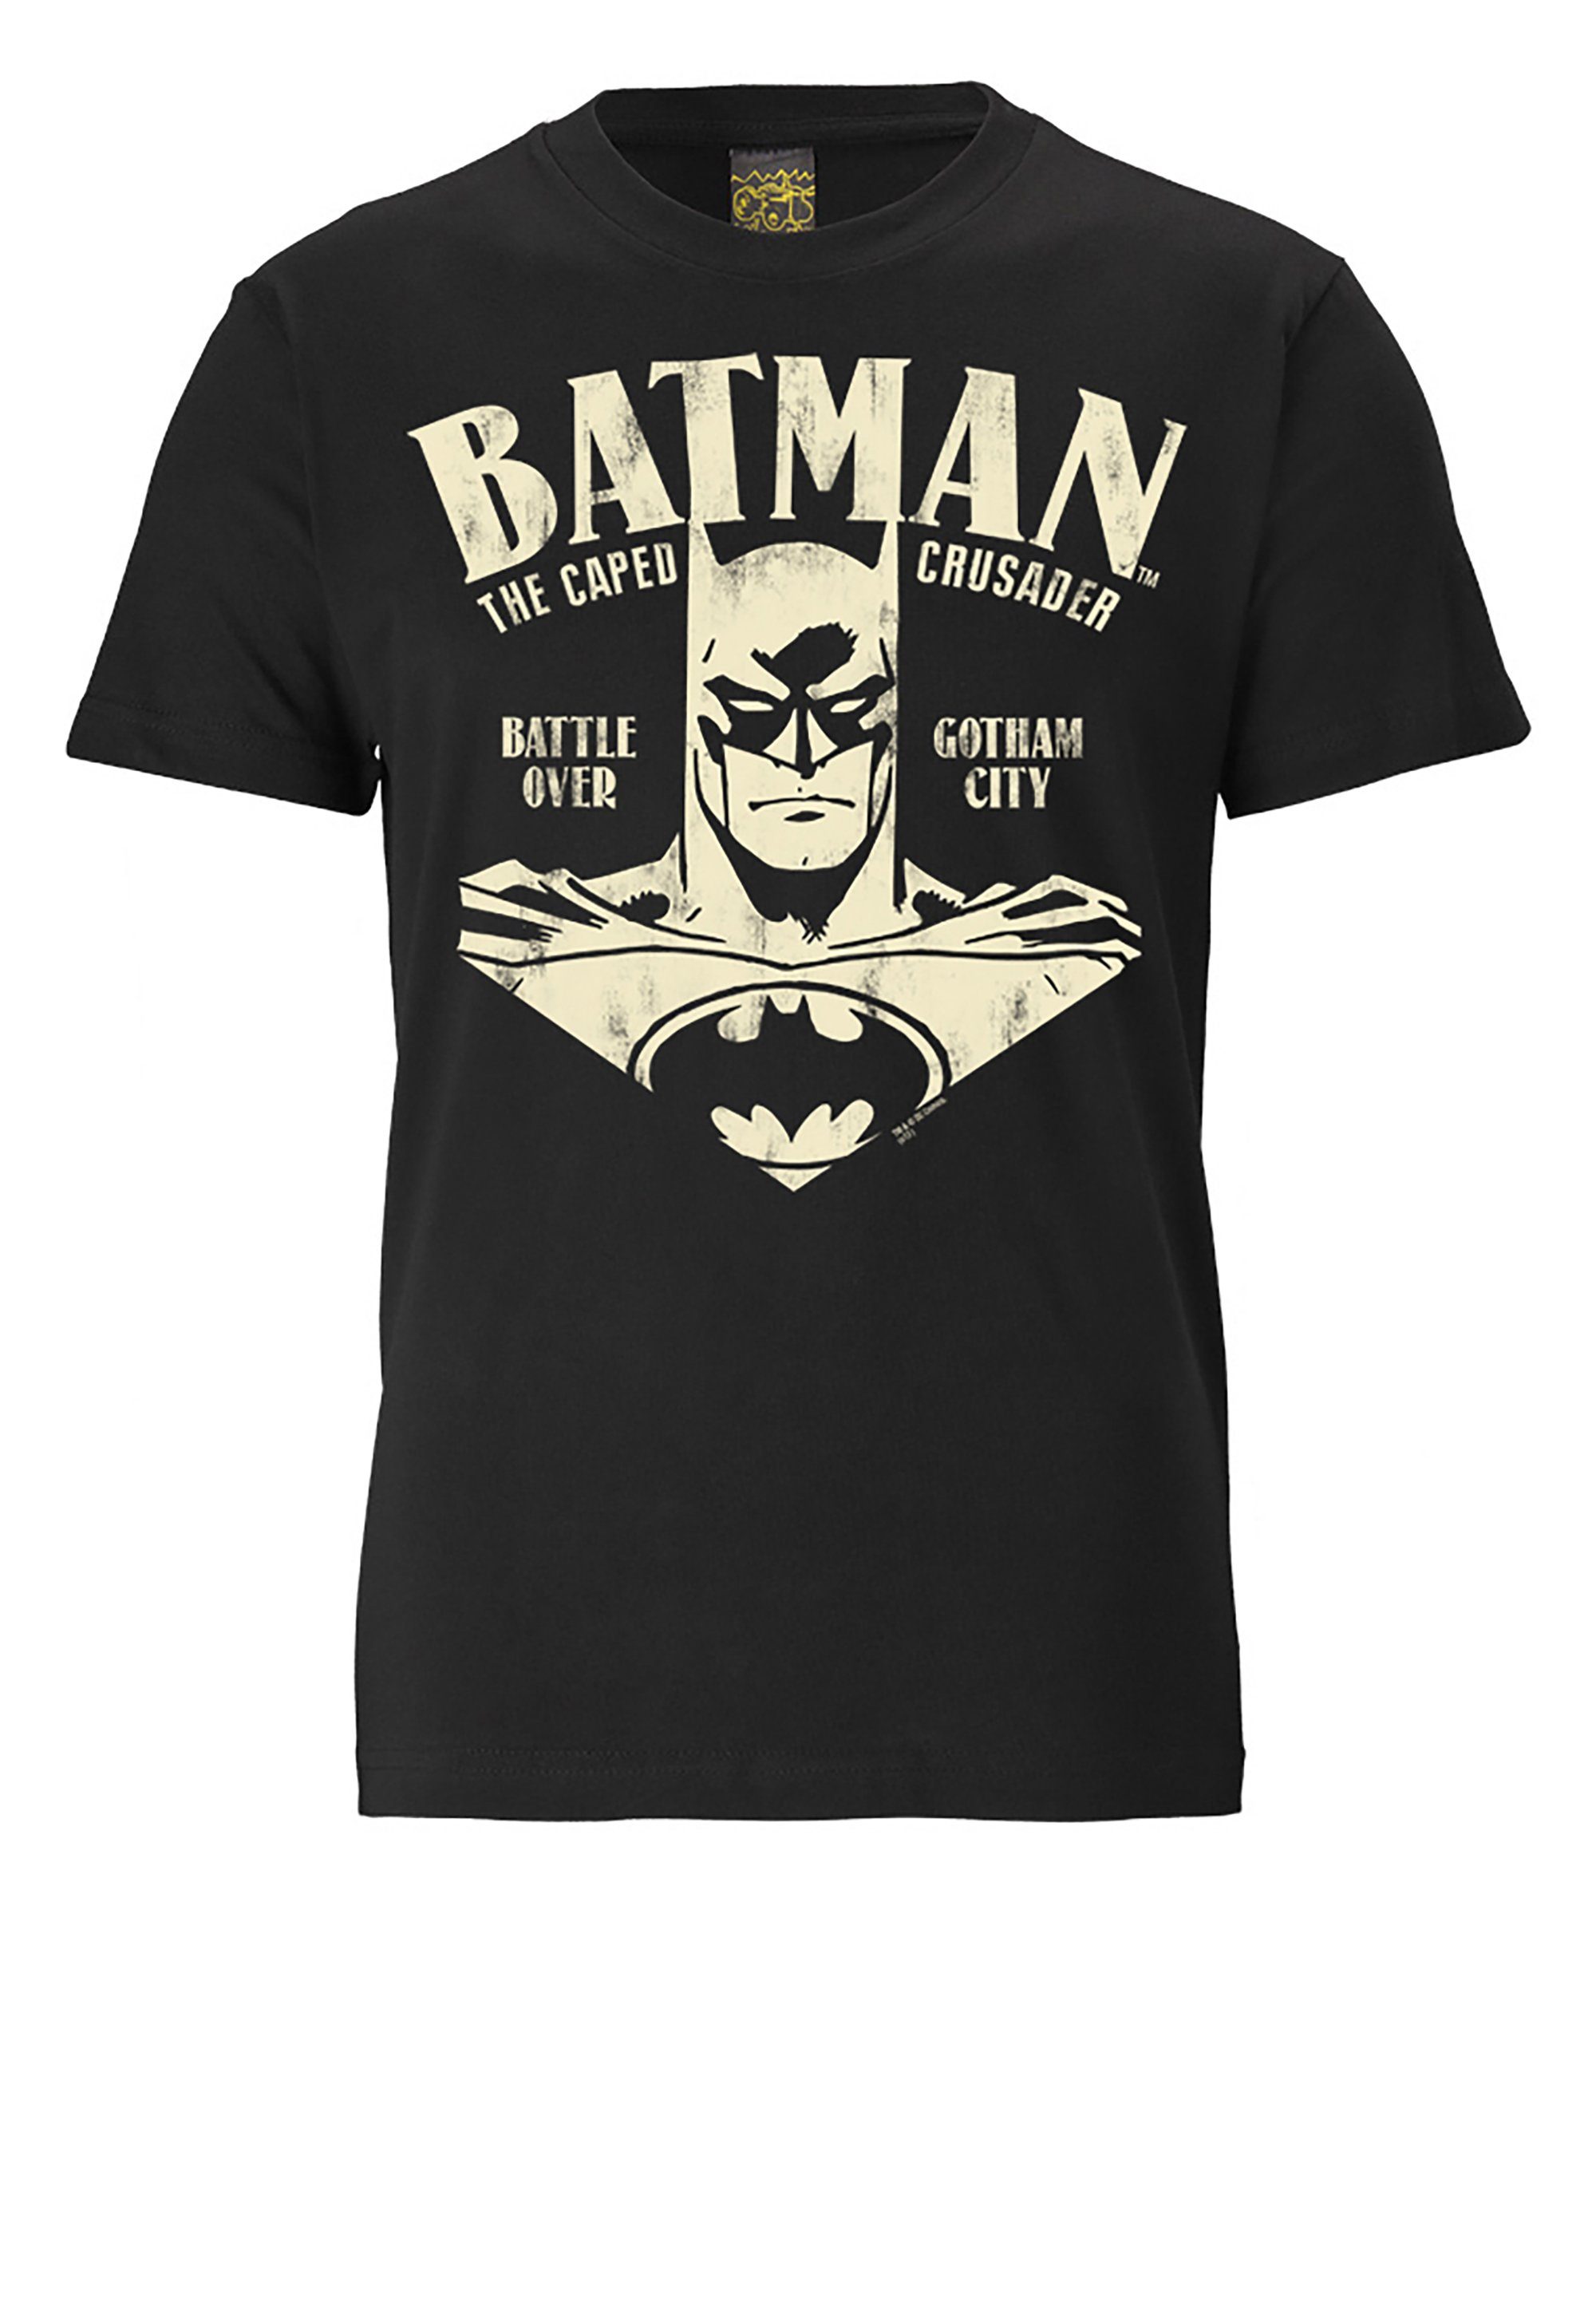 LOGOSHIRT T-Shirt Batman - Portrait mit Superhelden Print